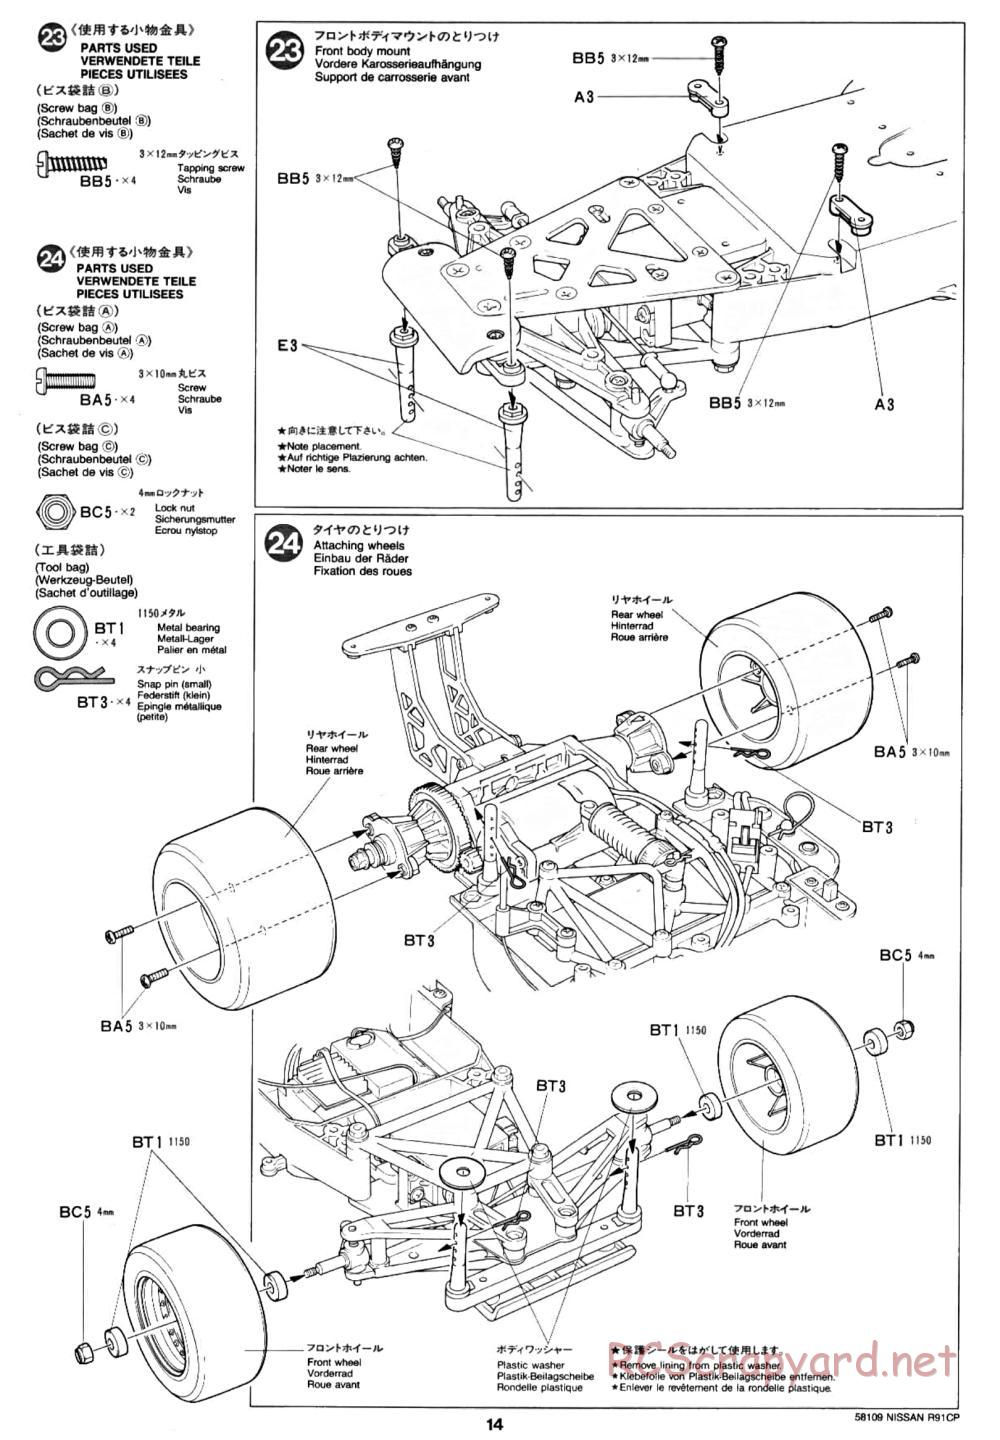 Tamiya - Nissan R91CP - Group-C Chassis - Manual - Page 14